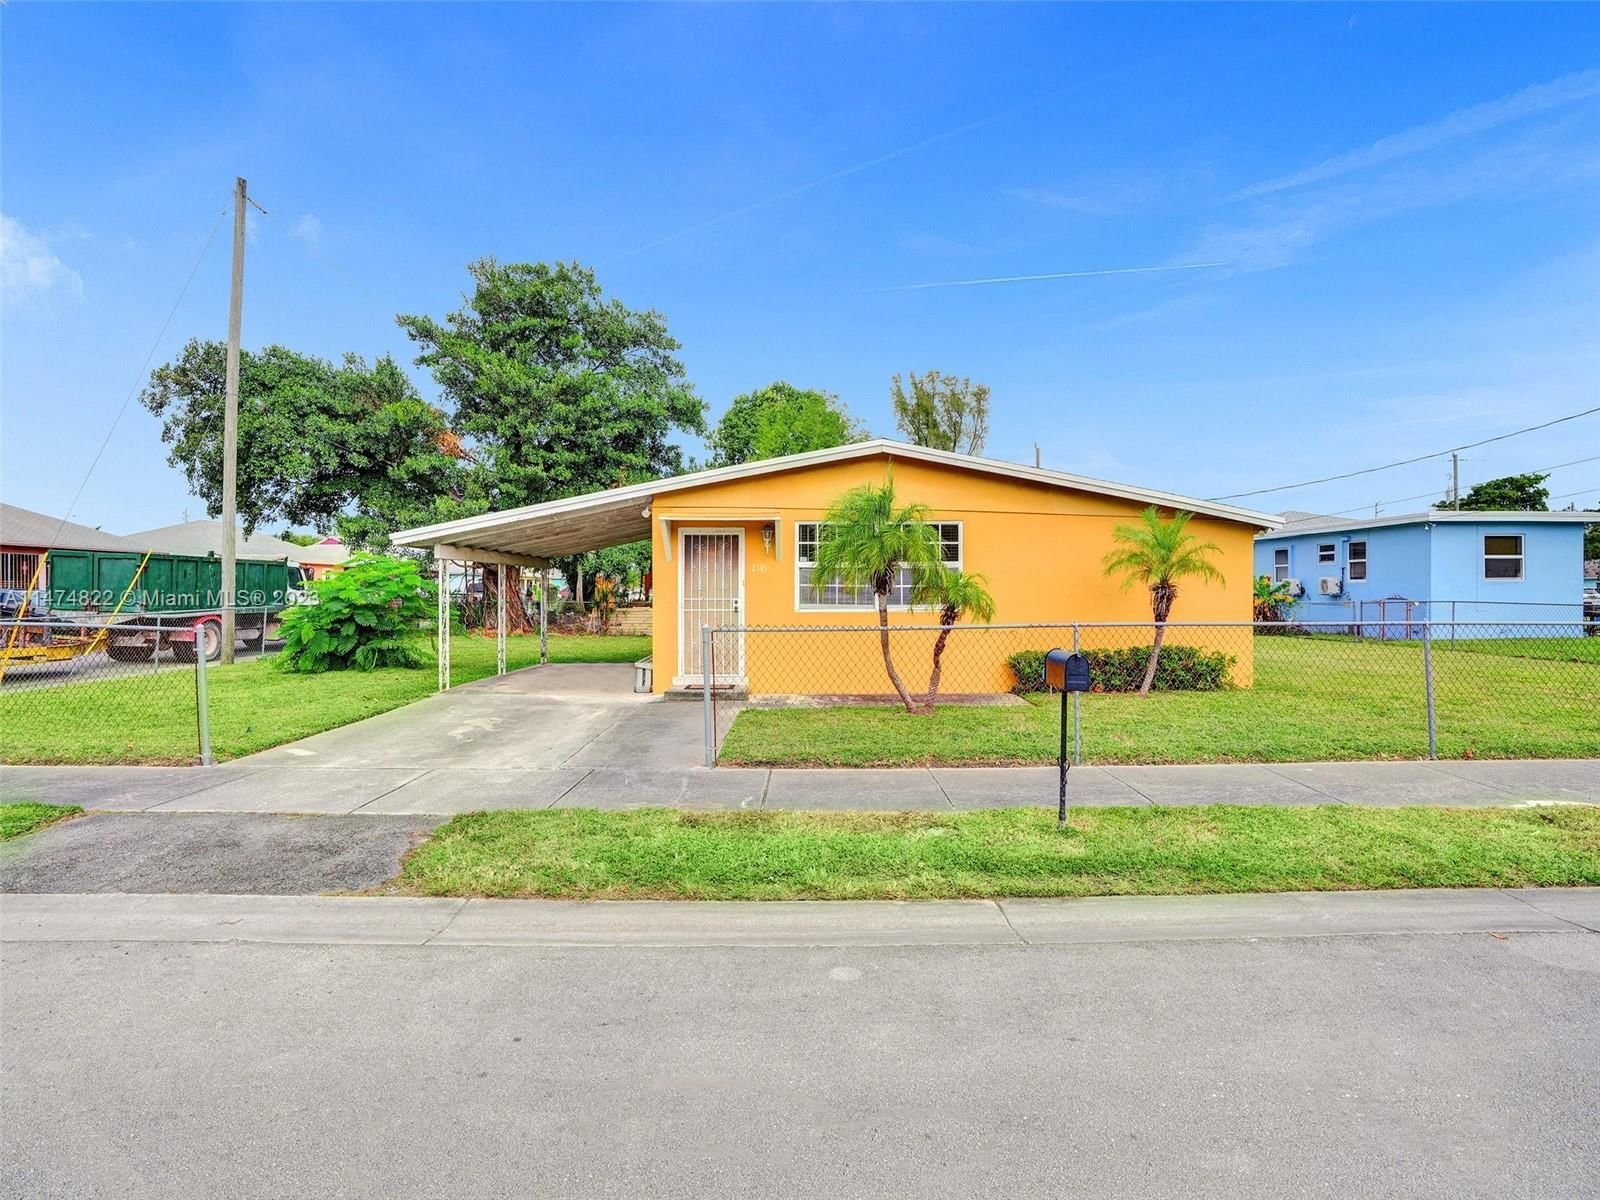 Real estate property located at 2145 69th St, Miami-Dade County, PARA VILLA HEIGHTS, Miami, FL